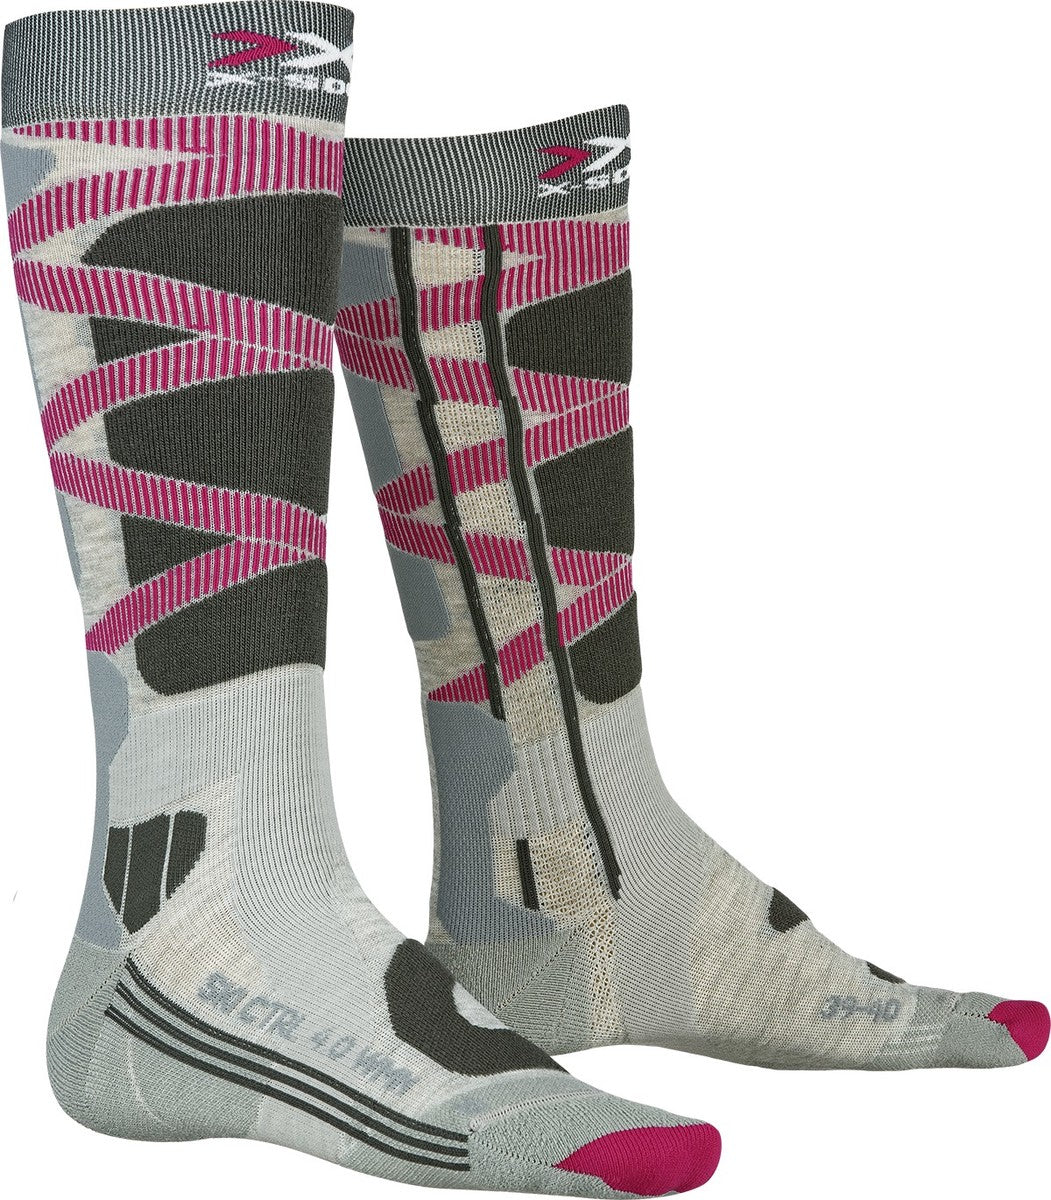 X-Socks Ski Control 4.0 W skisokken grijs/paars dames